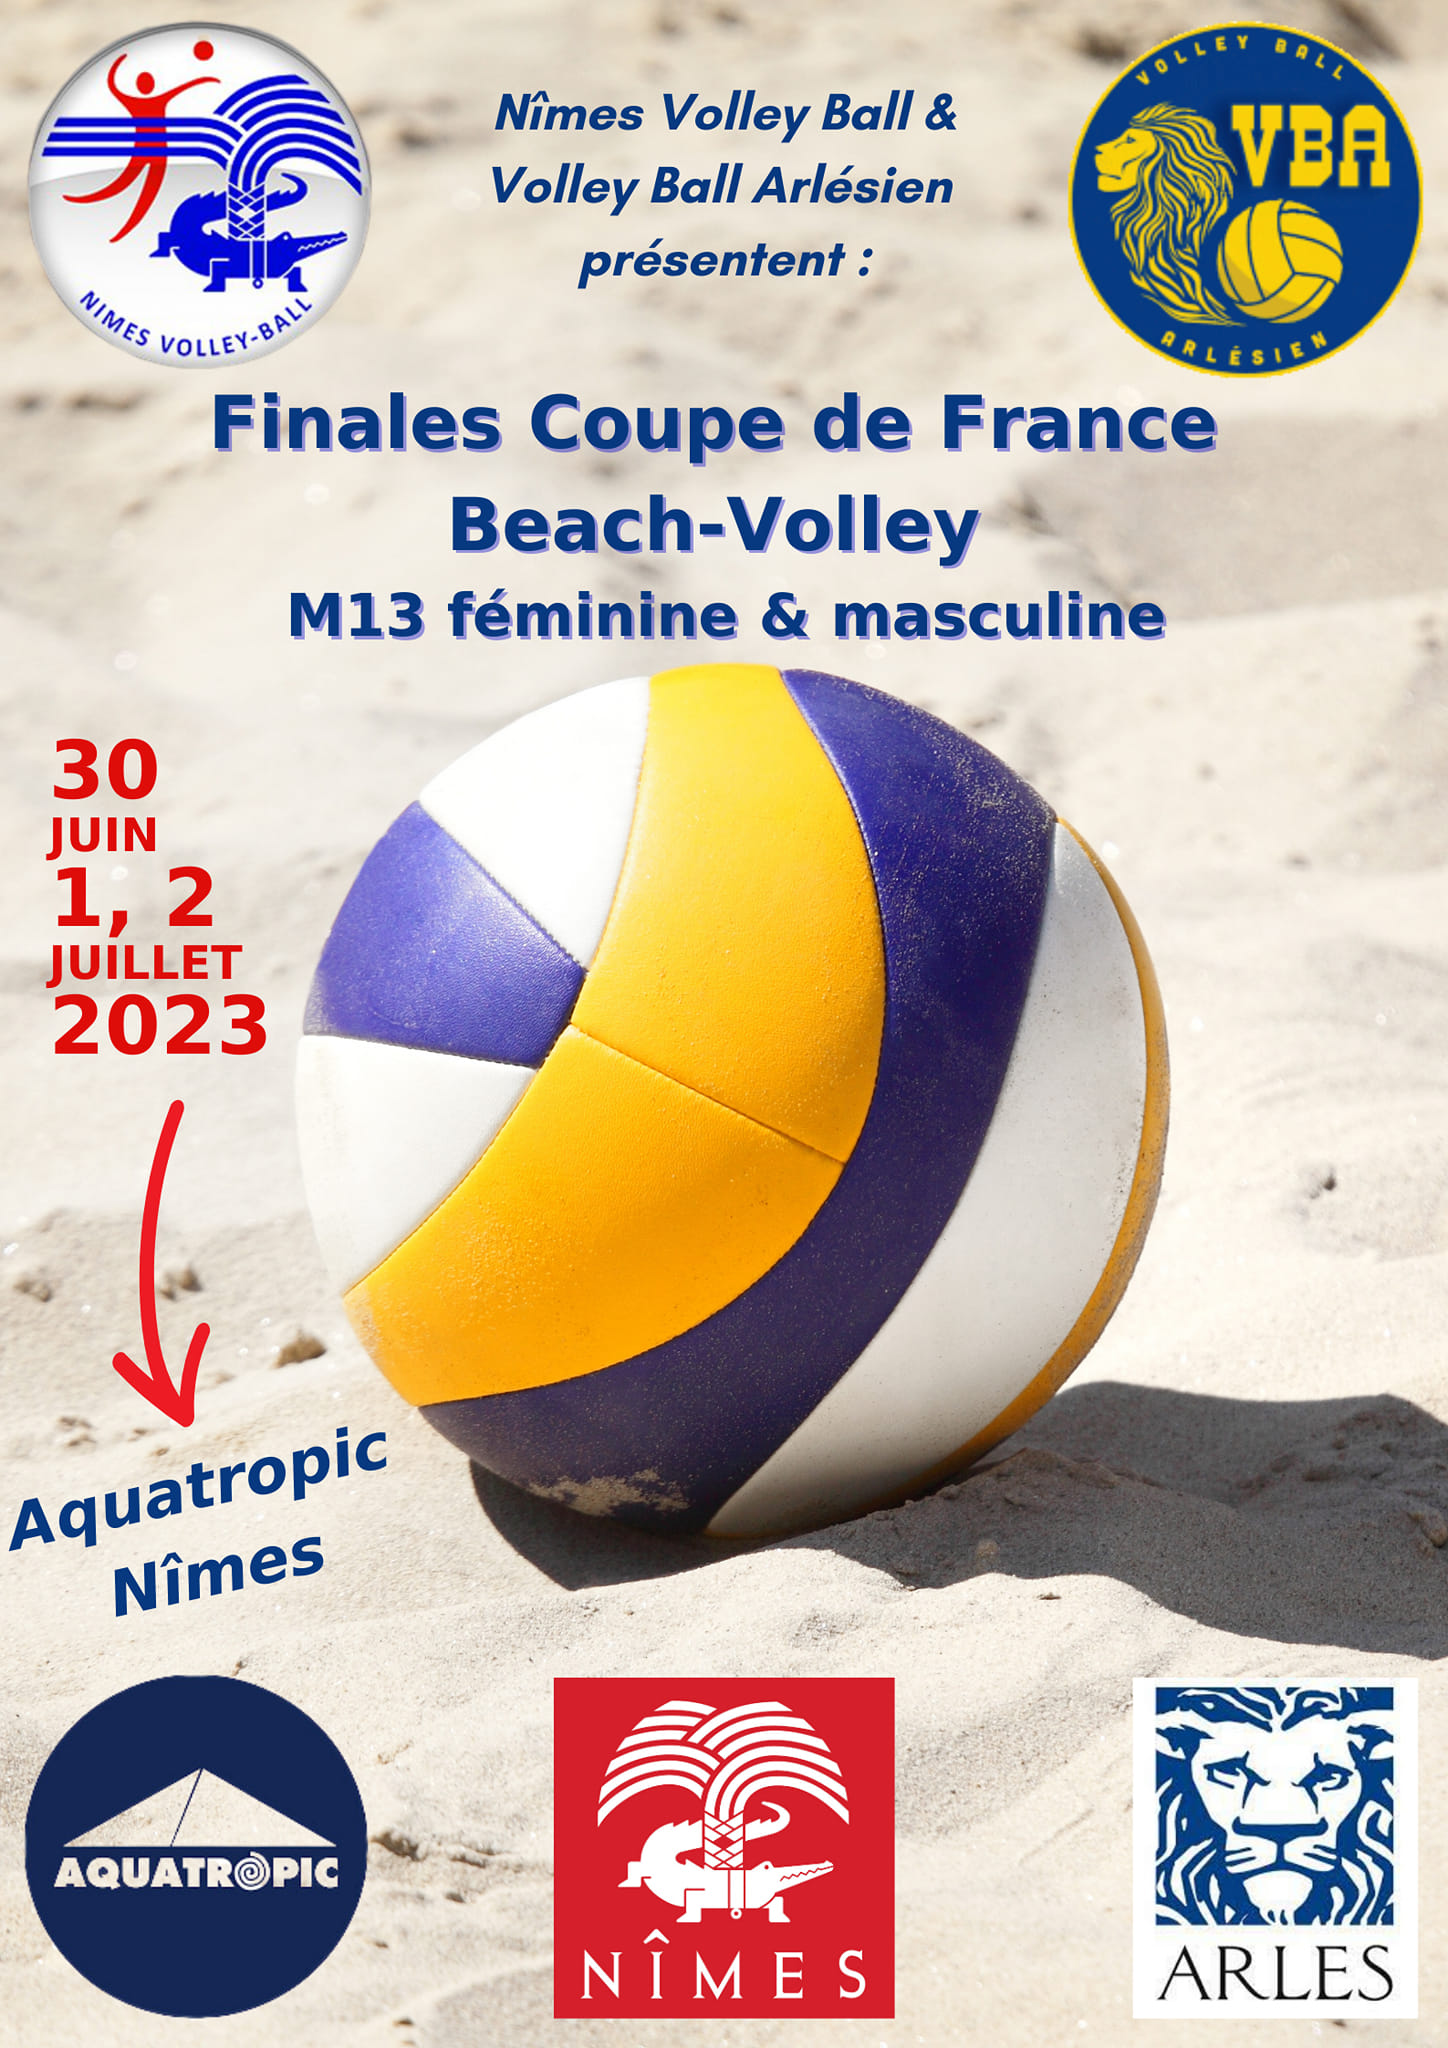 Finales Coupe de France de Beach-Volley